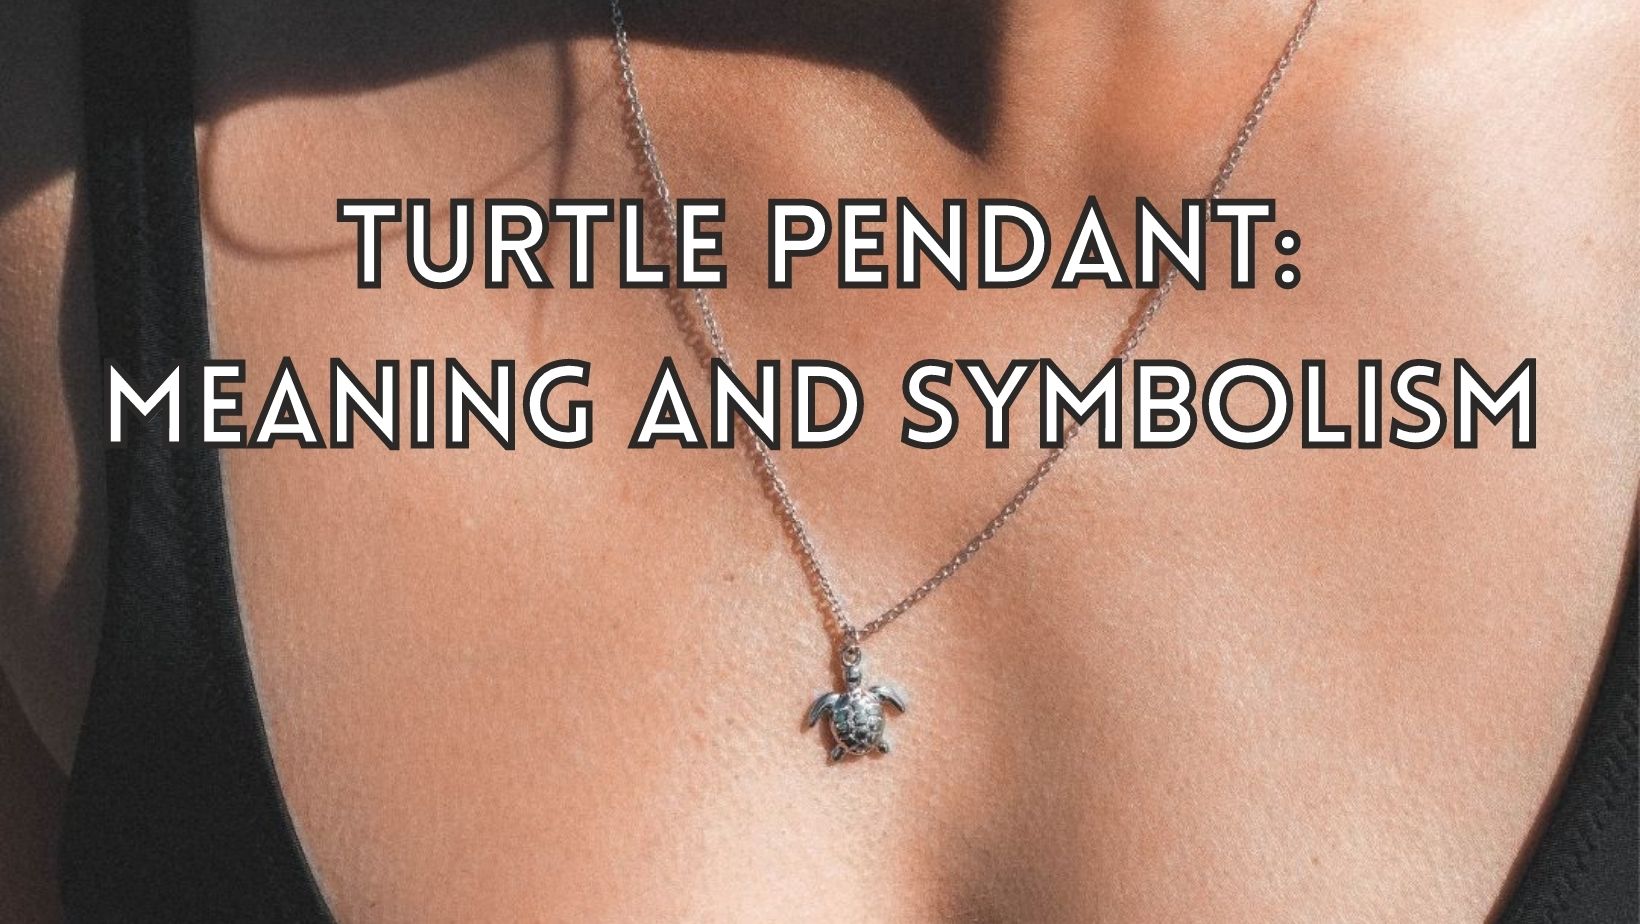 Turtle pendant symbolism